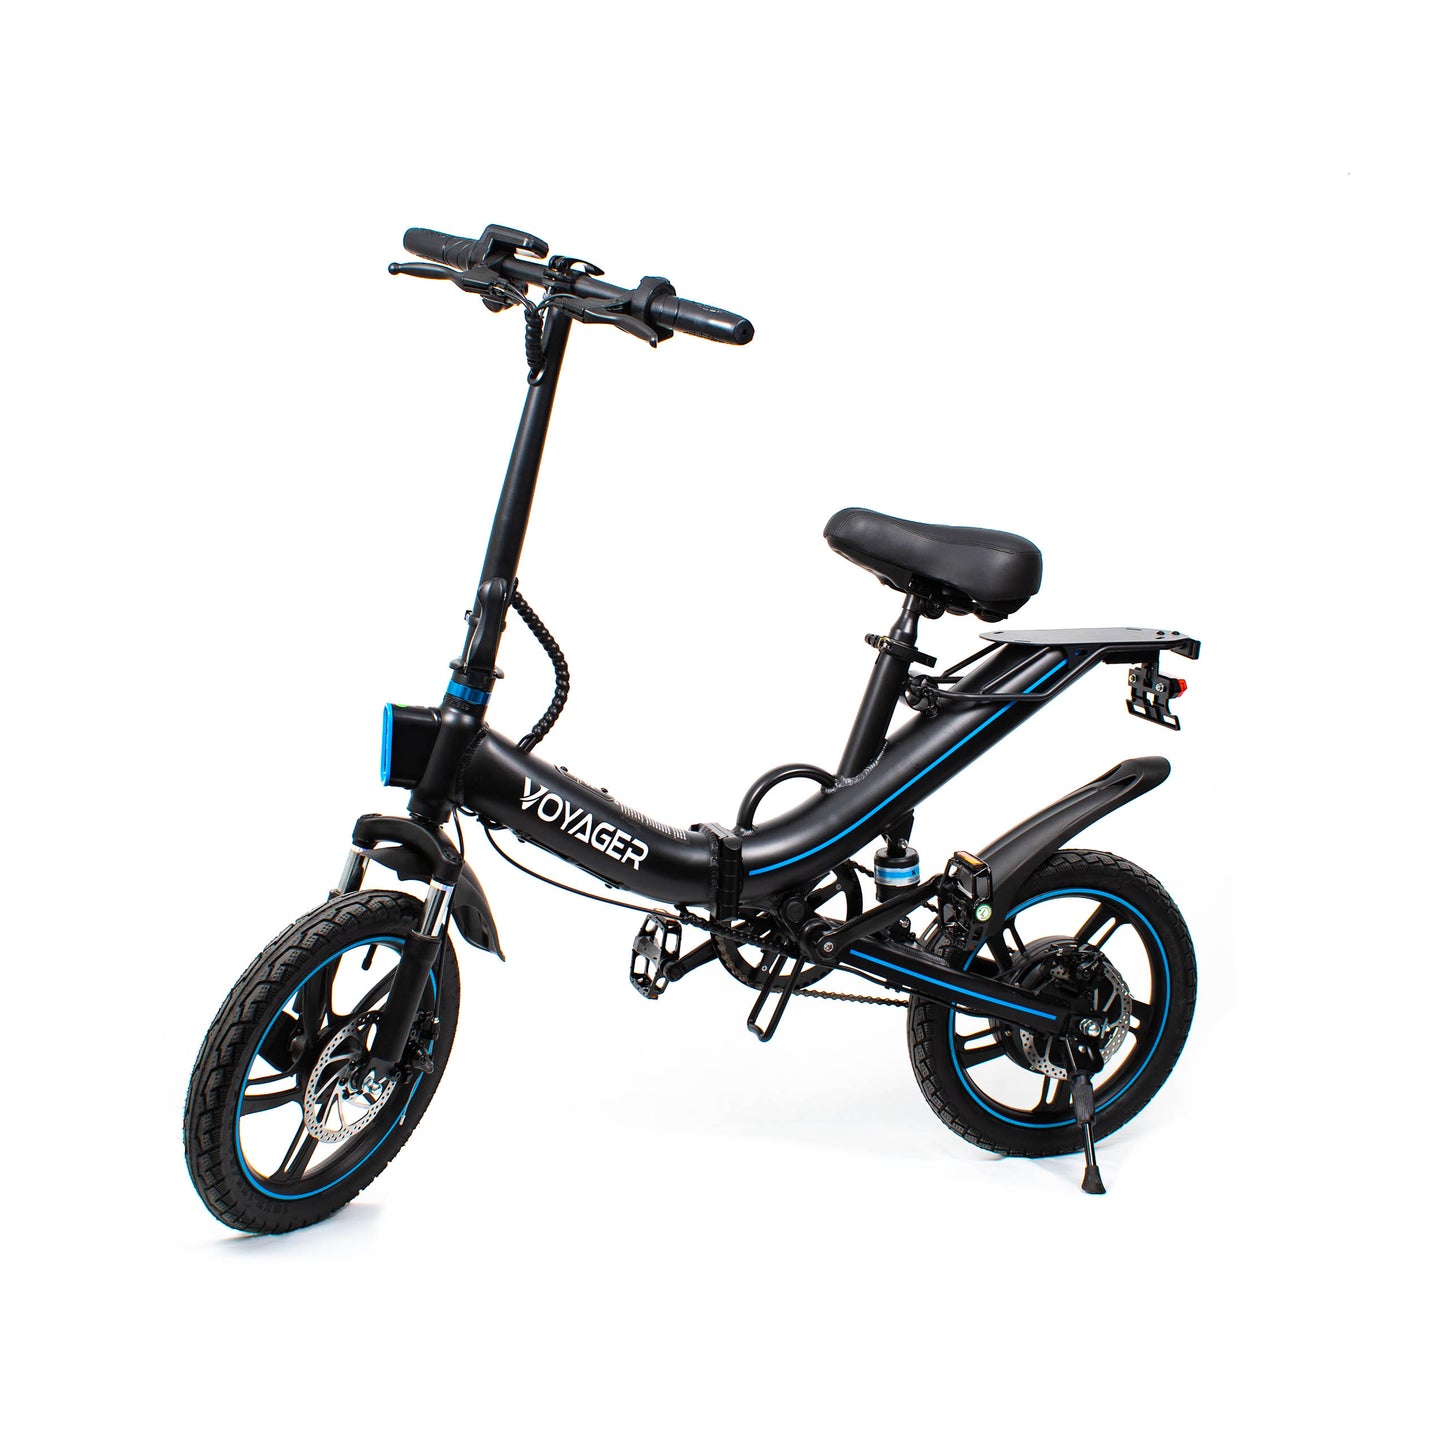 radius-pro-v2-bike-4050rp-v2-new-blue-1